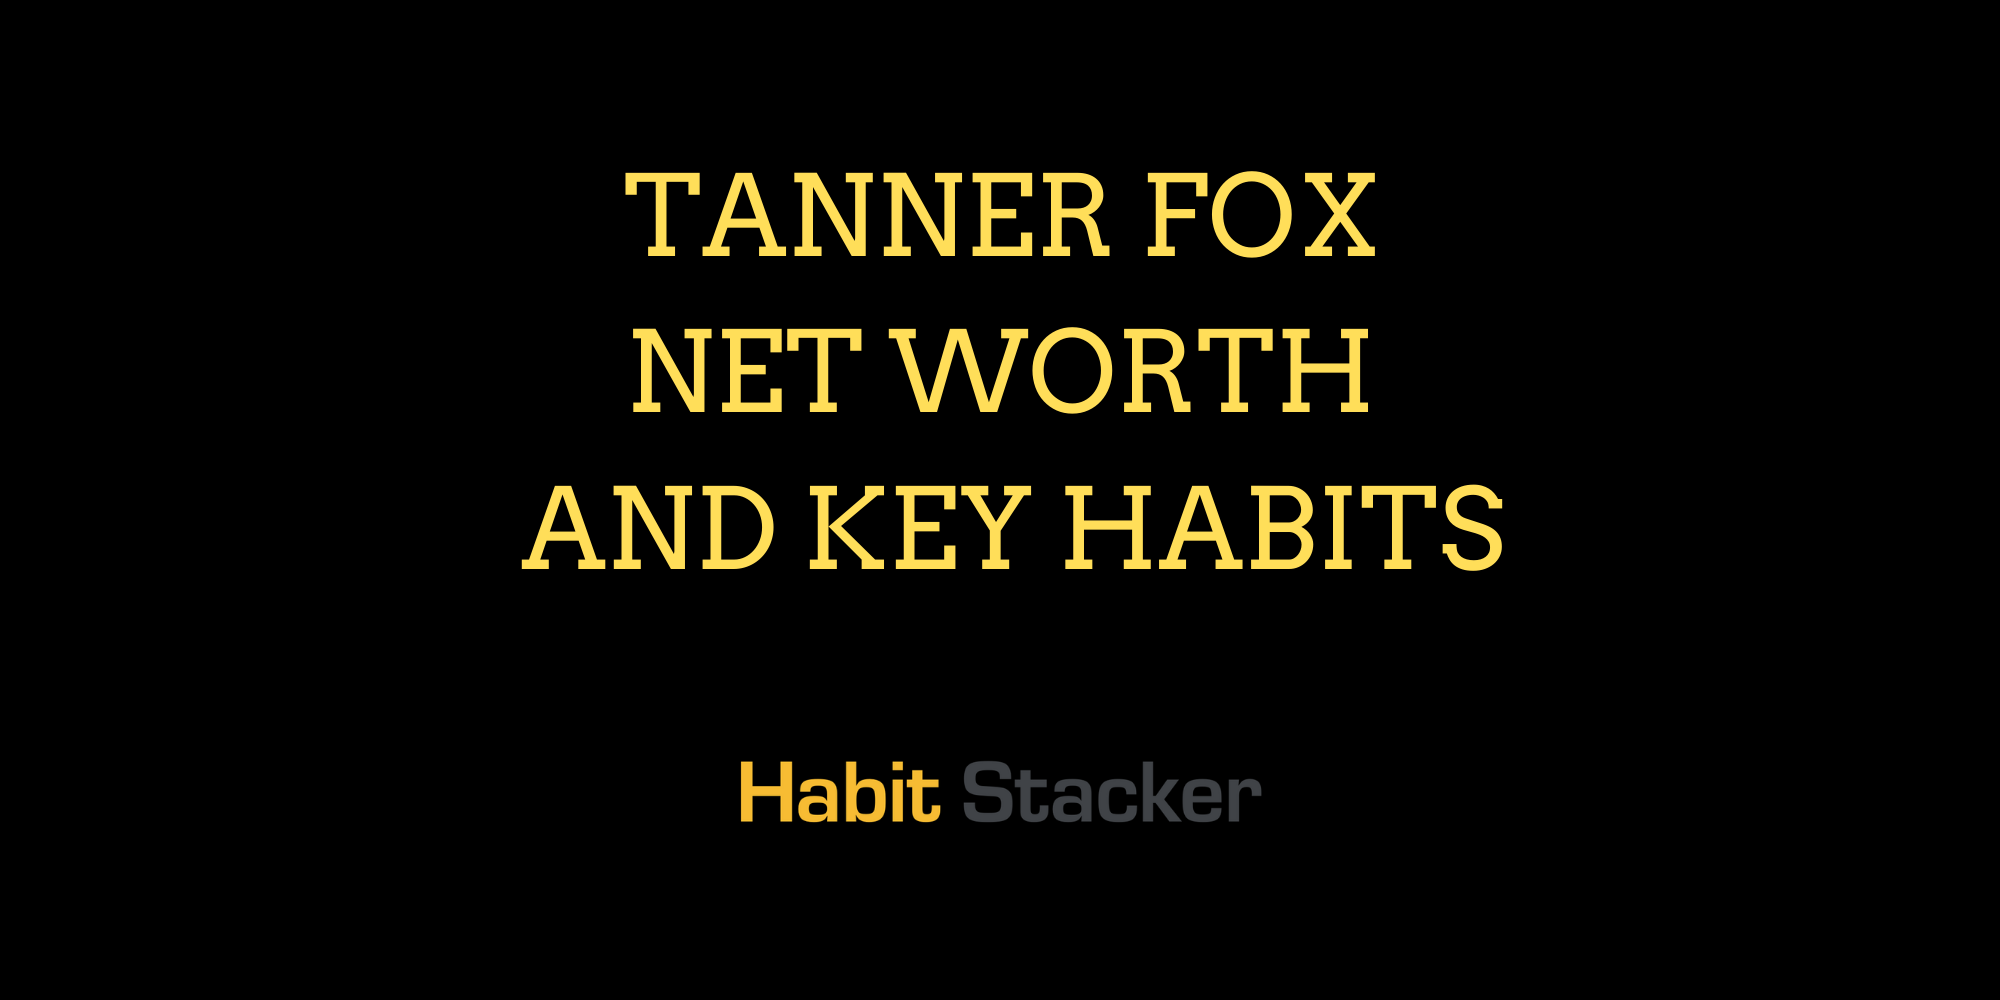 Tanner Fox Net Worth And Key Habits